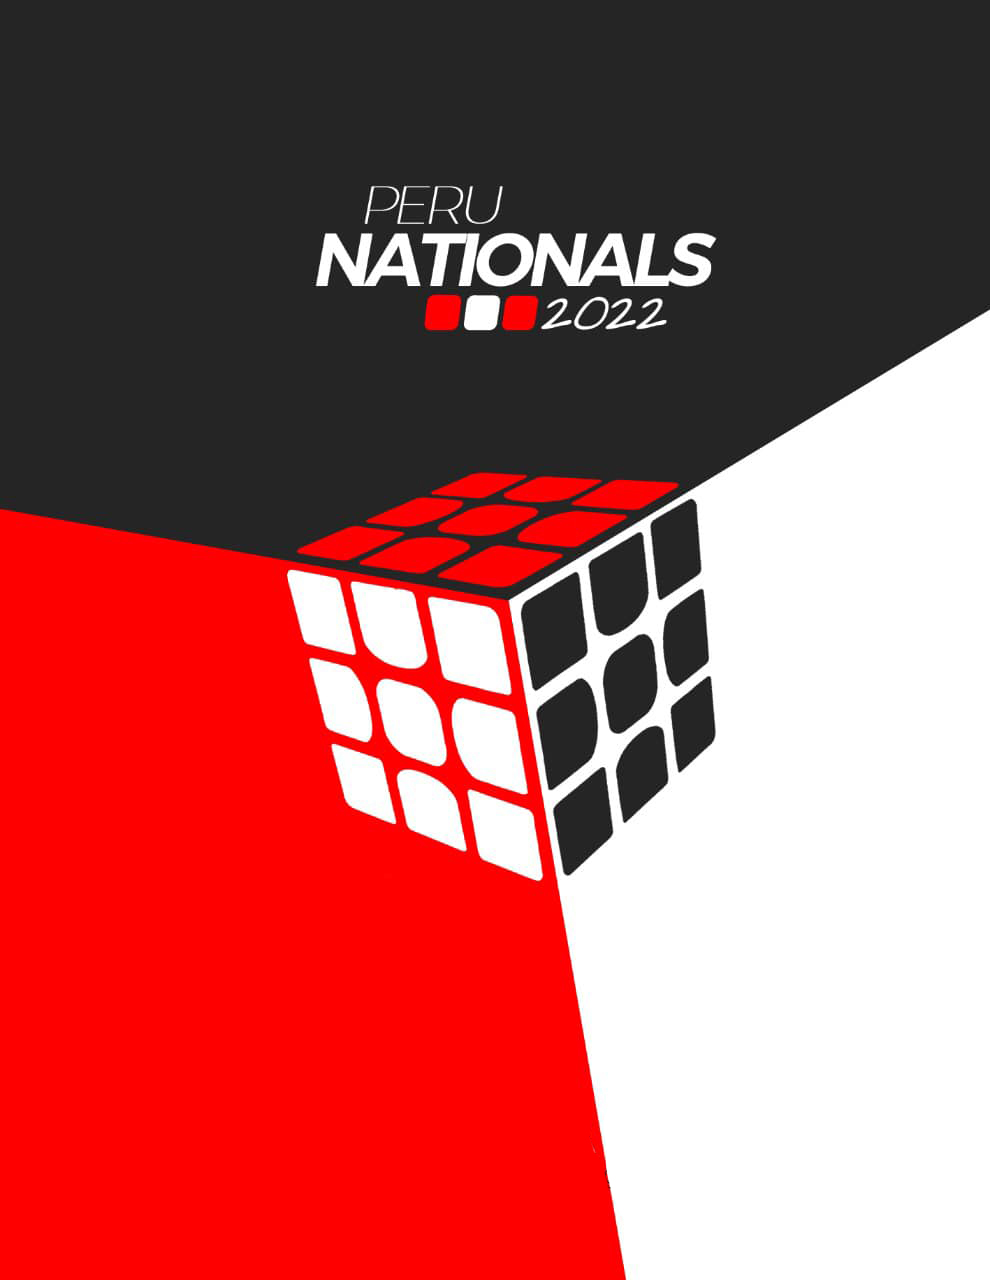 Peru Nationals 2022